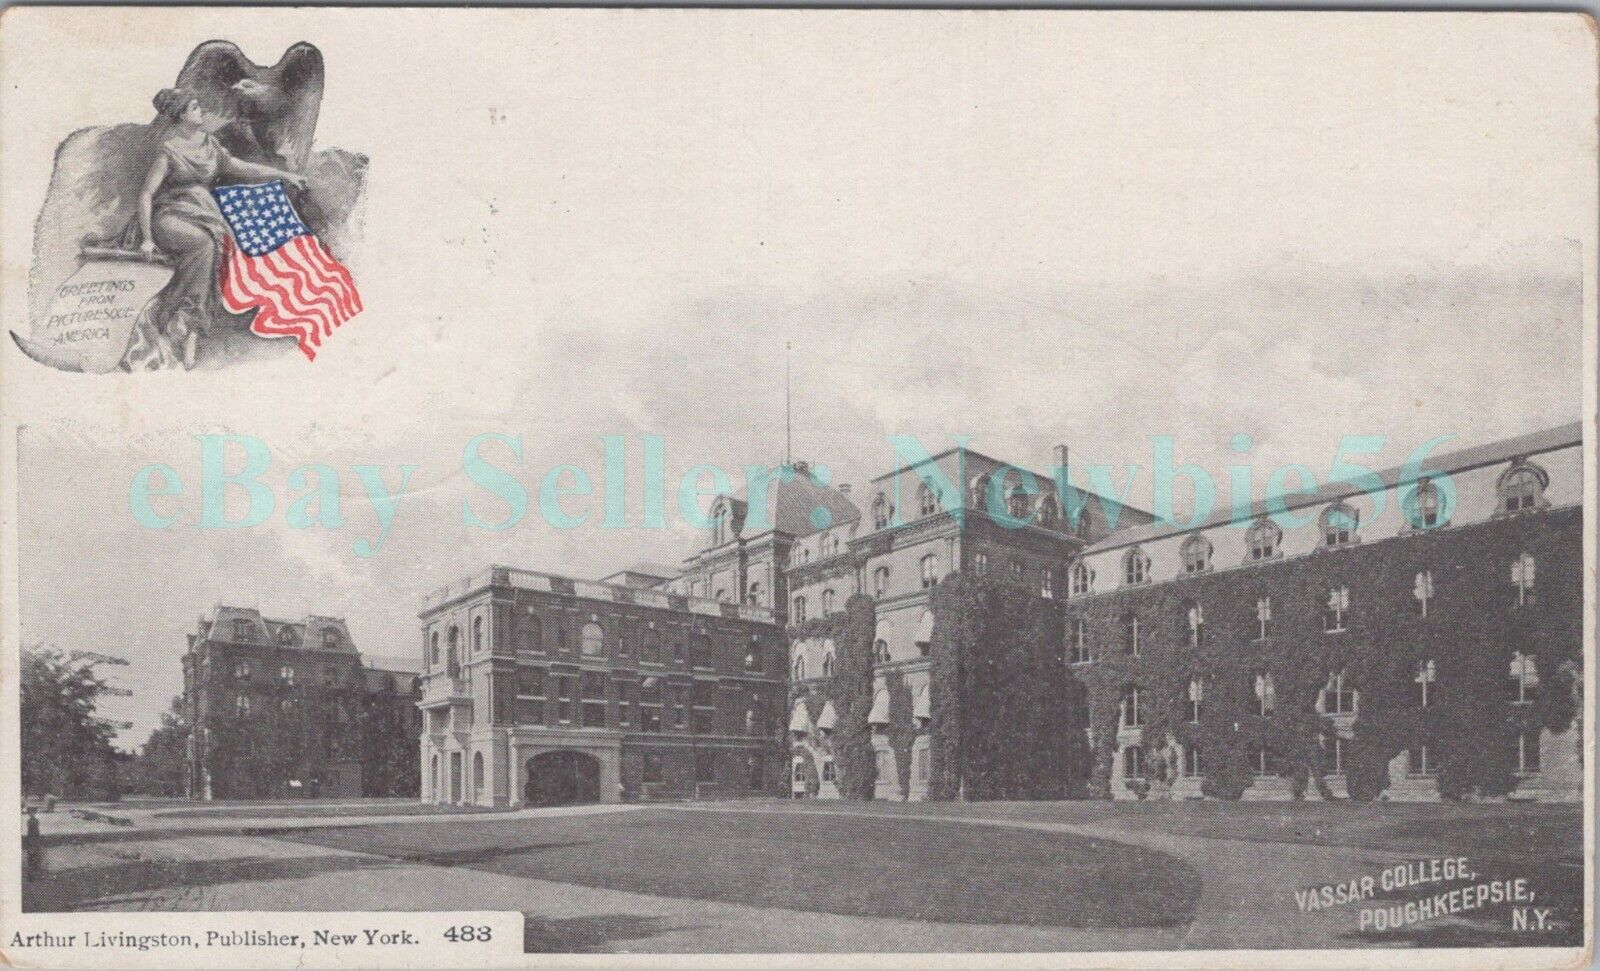 Poughkeepsie NY - VASSAR COLLEGE MAIN BUILDING - 1904 Arthur Livingston Postcard